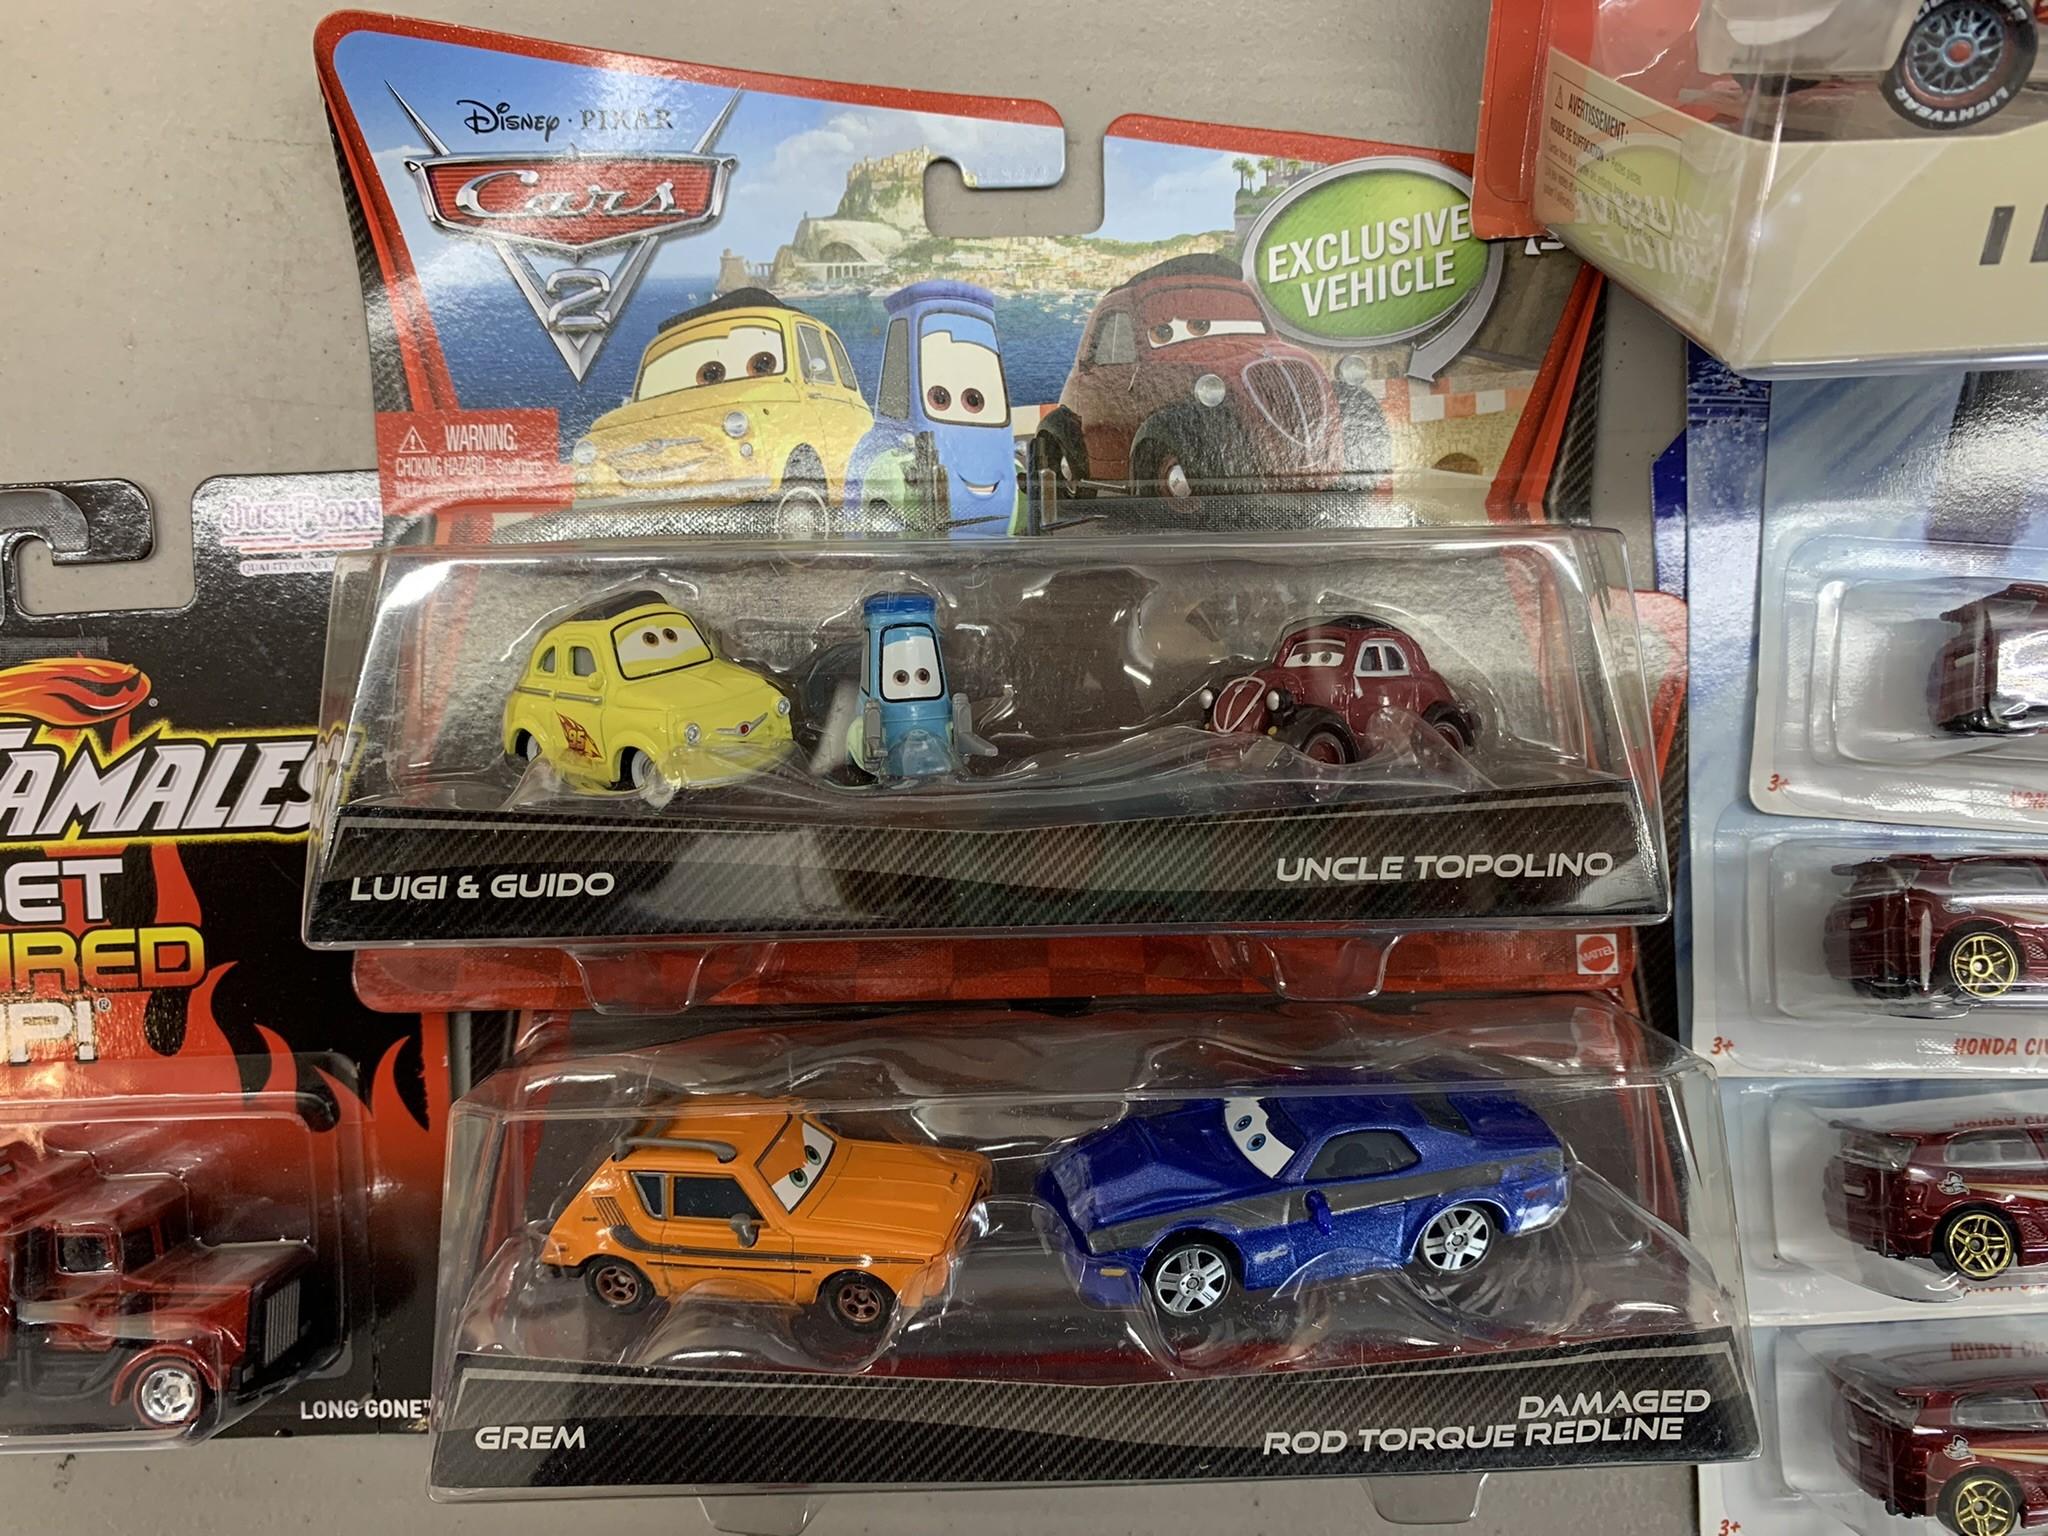 Disney Pixar Cars, Hot Wheels, Matchbox